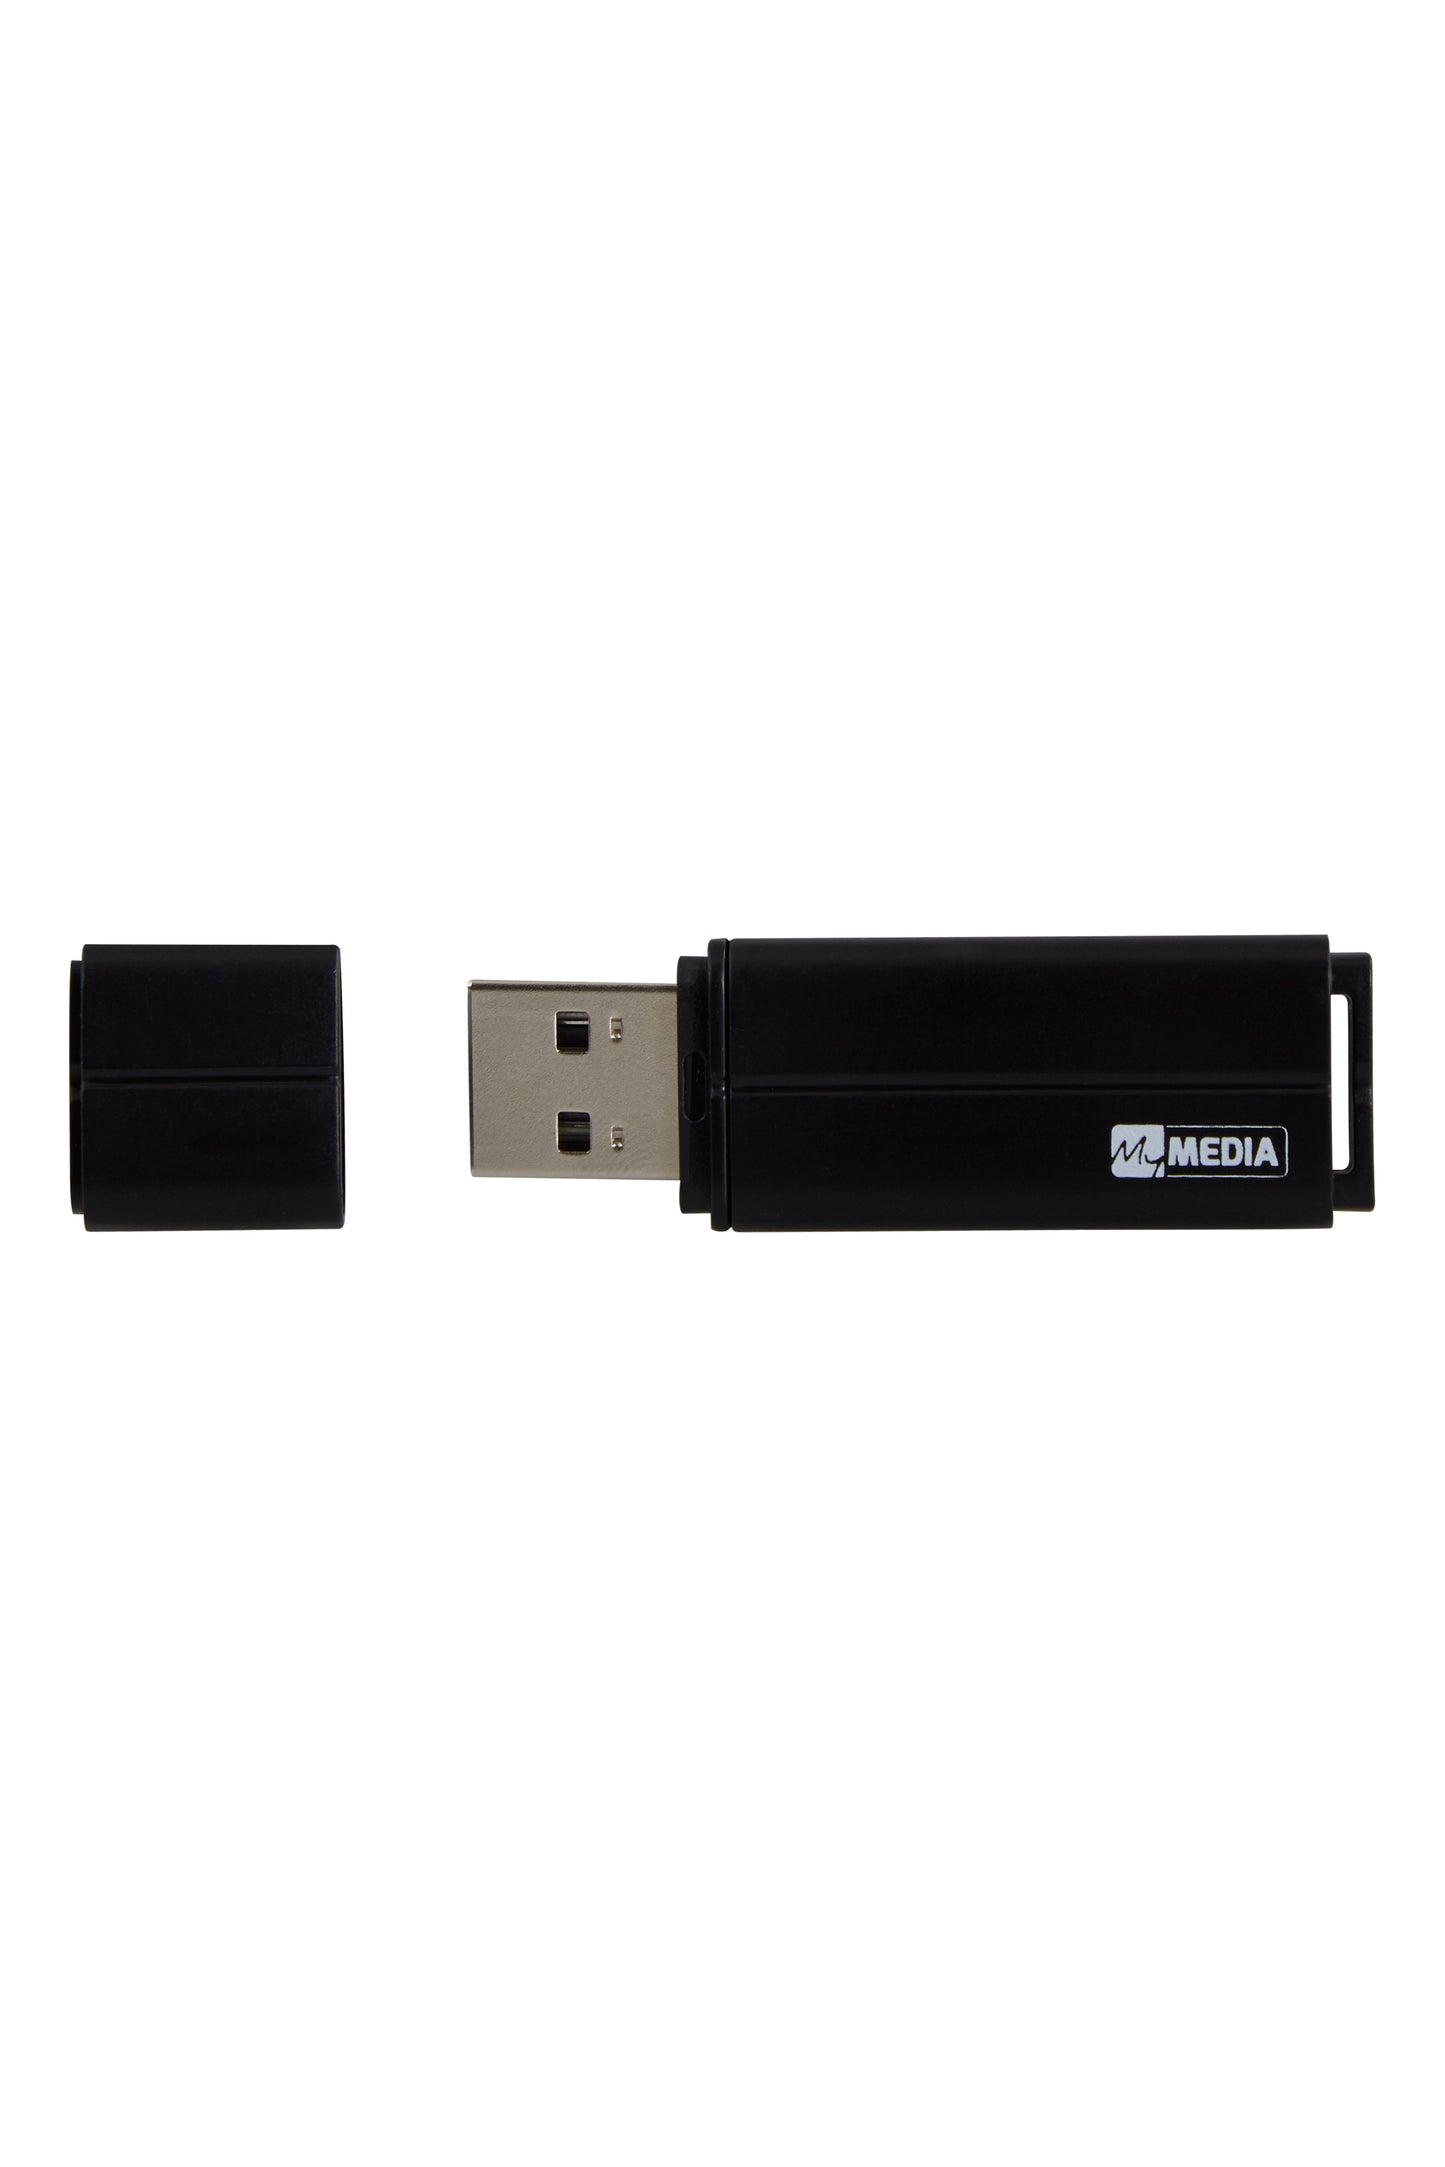 MYMEDIA USB 16GB  BLACK PINSTRIPE MYMEDIA